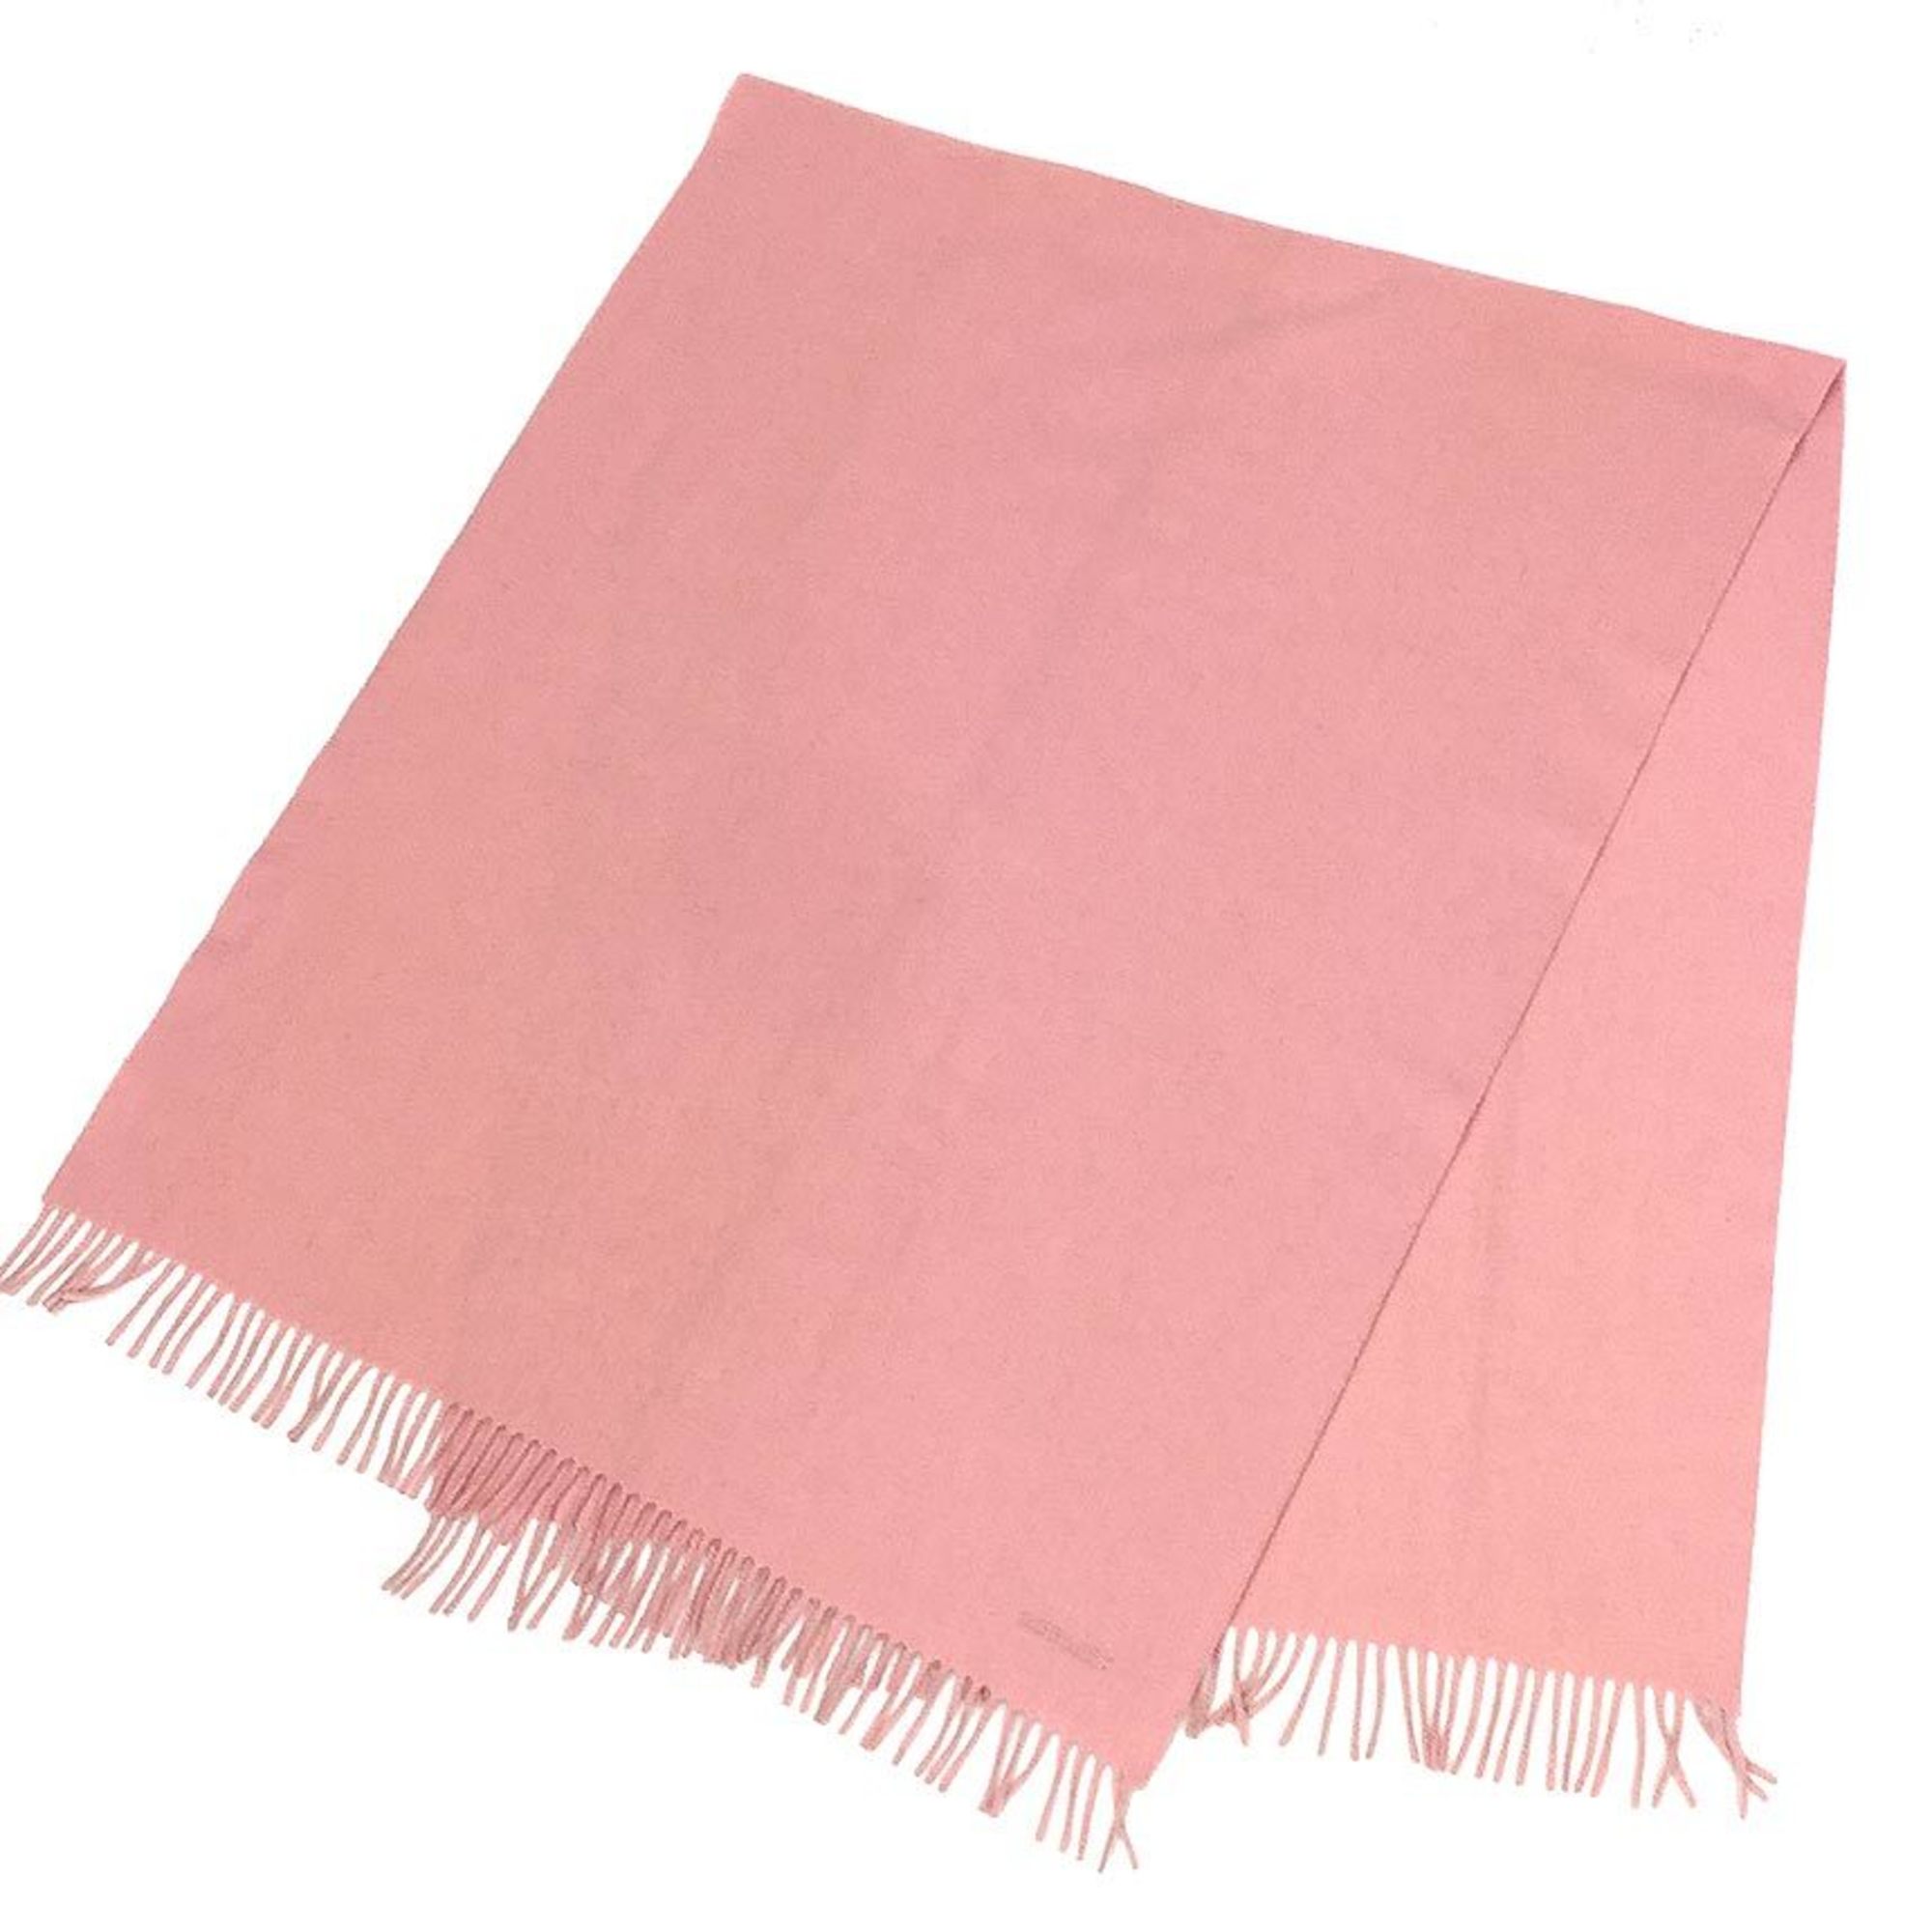 HERMES Cashmere Scarf ETOLE CACHEMIRE JOHNSTON Stole Shawl Large Blanket Pink Women aq10090 10009303